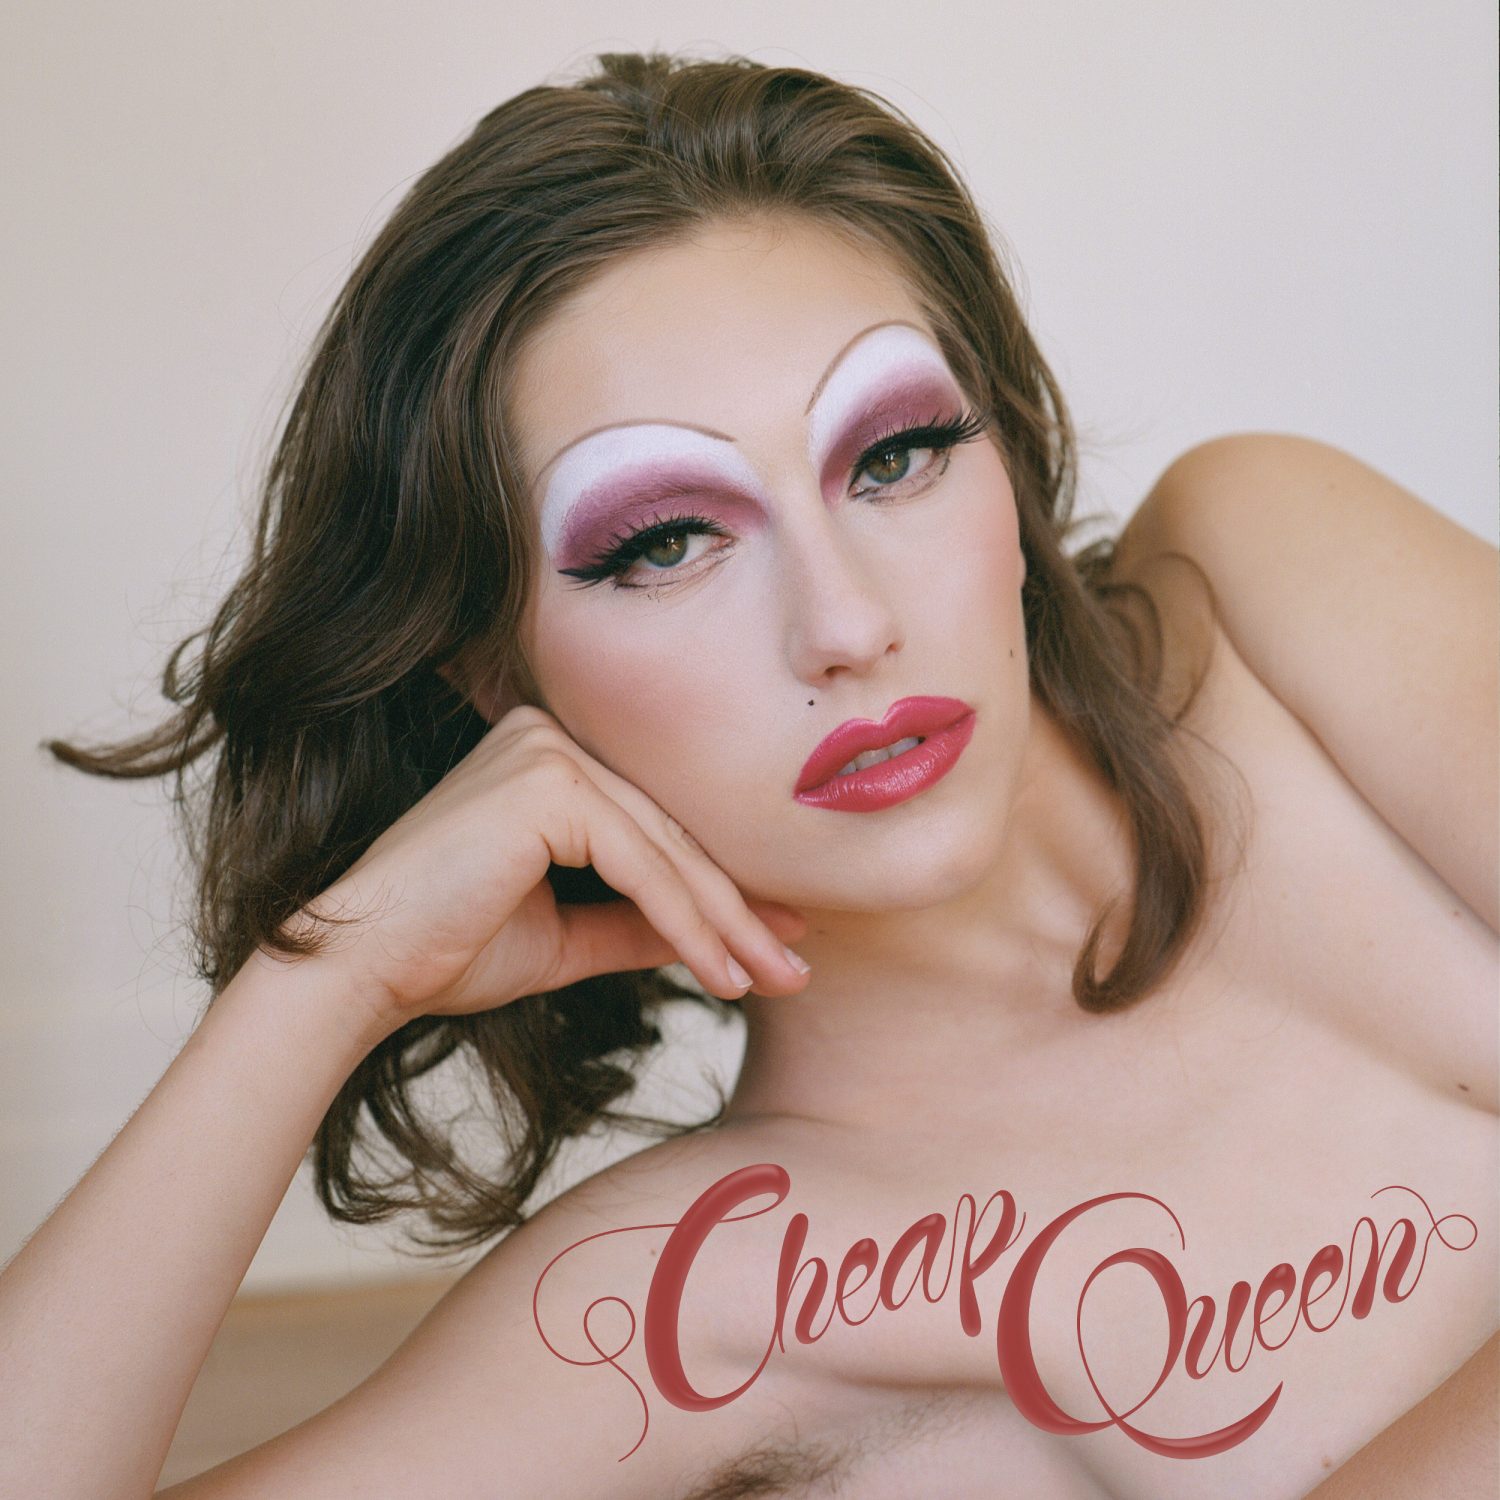 King Princess - “Cheap Queen“ (Columbia/Sony Music) 